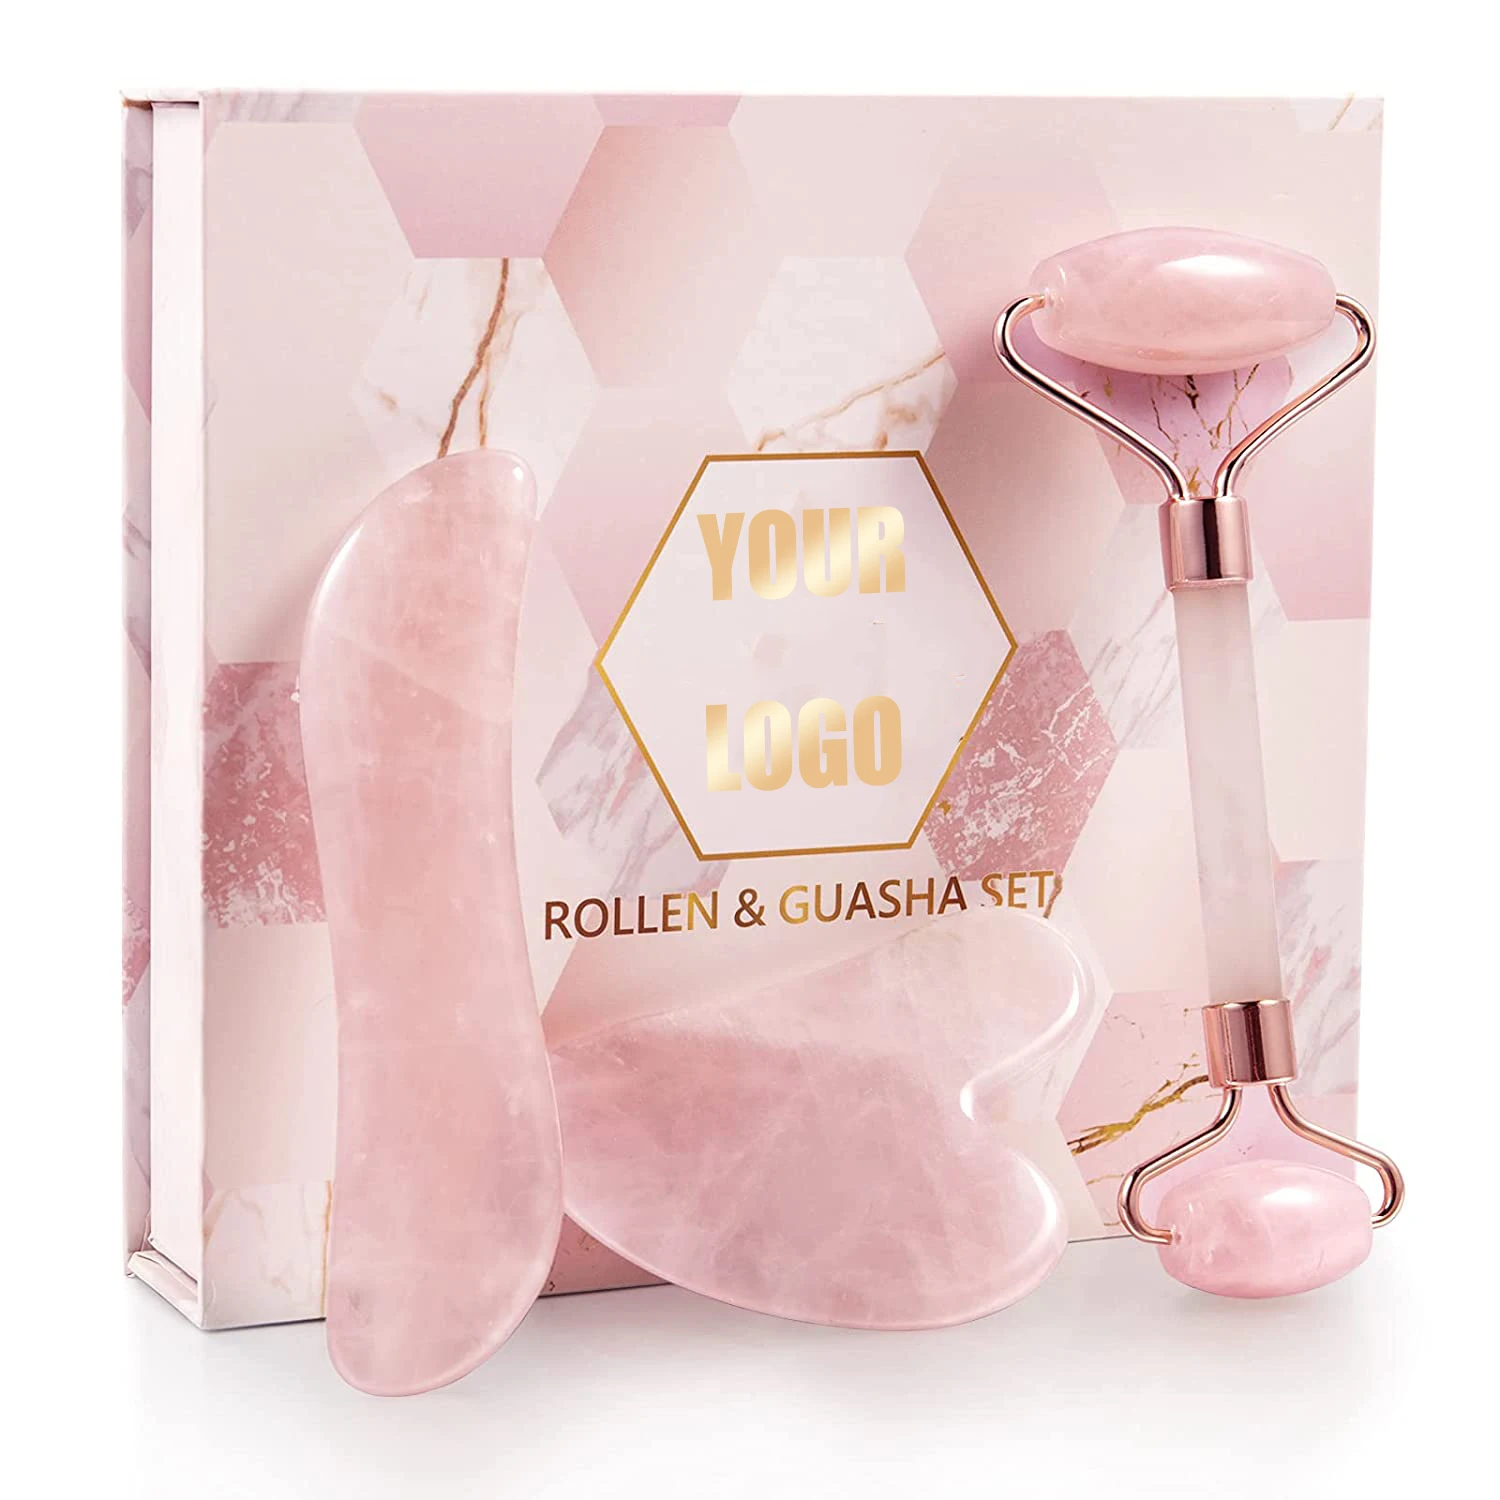 

Wholesale Facial Eye 3d Derma Roller Icing Double Face Massage Jade Roller Gua Sha Set, Pink rose quartz